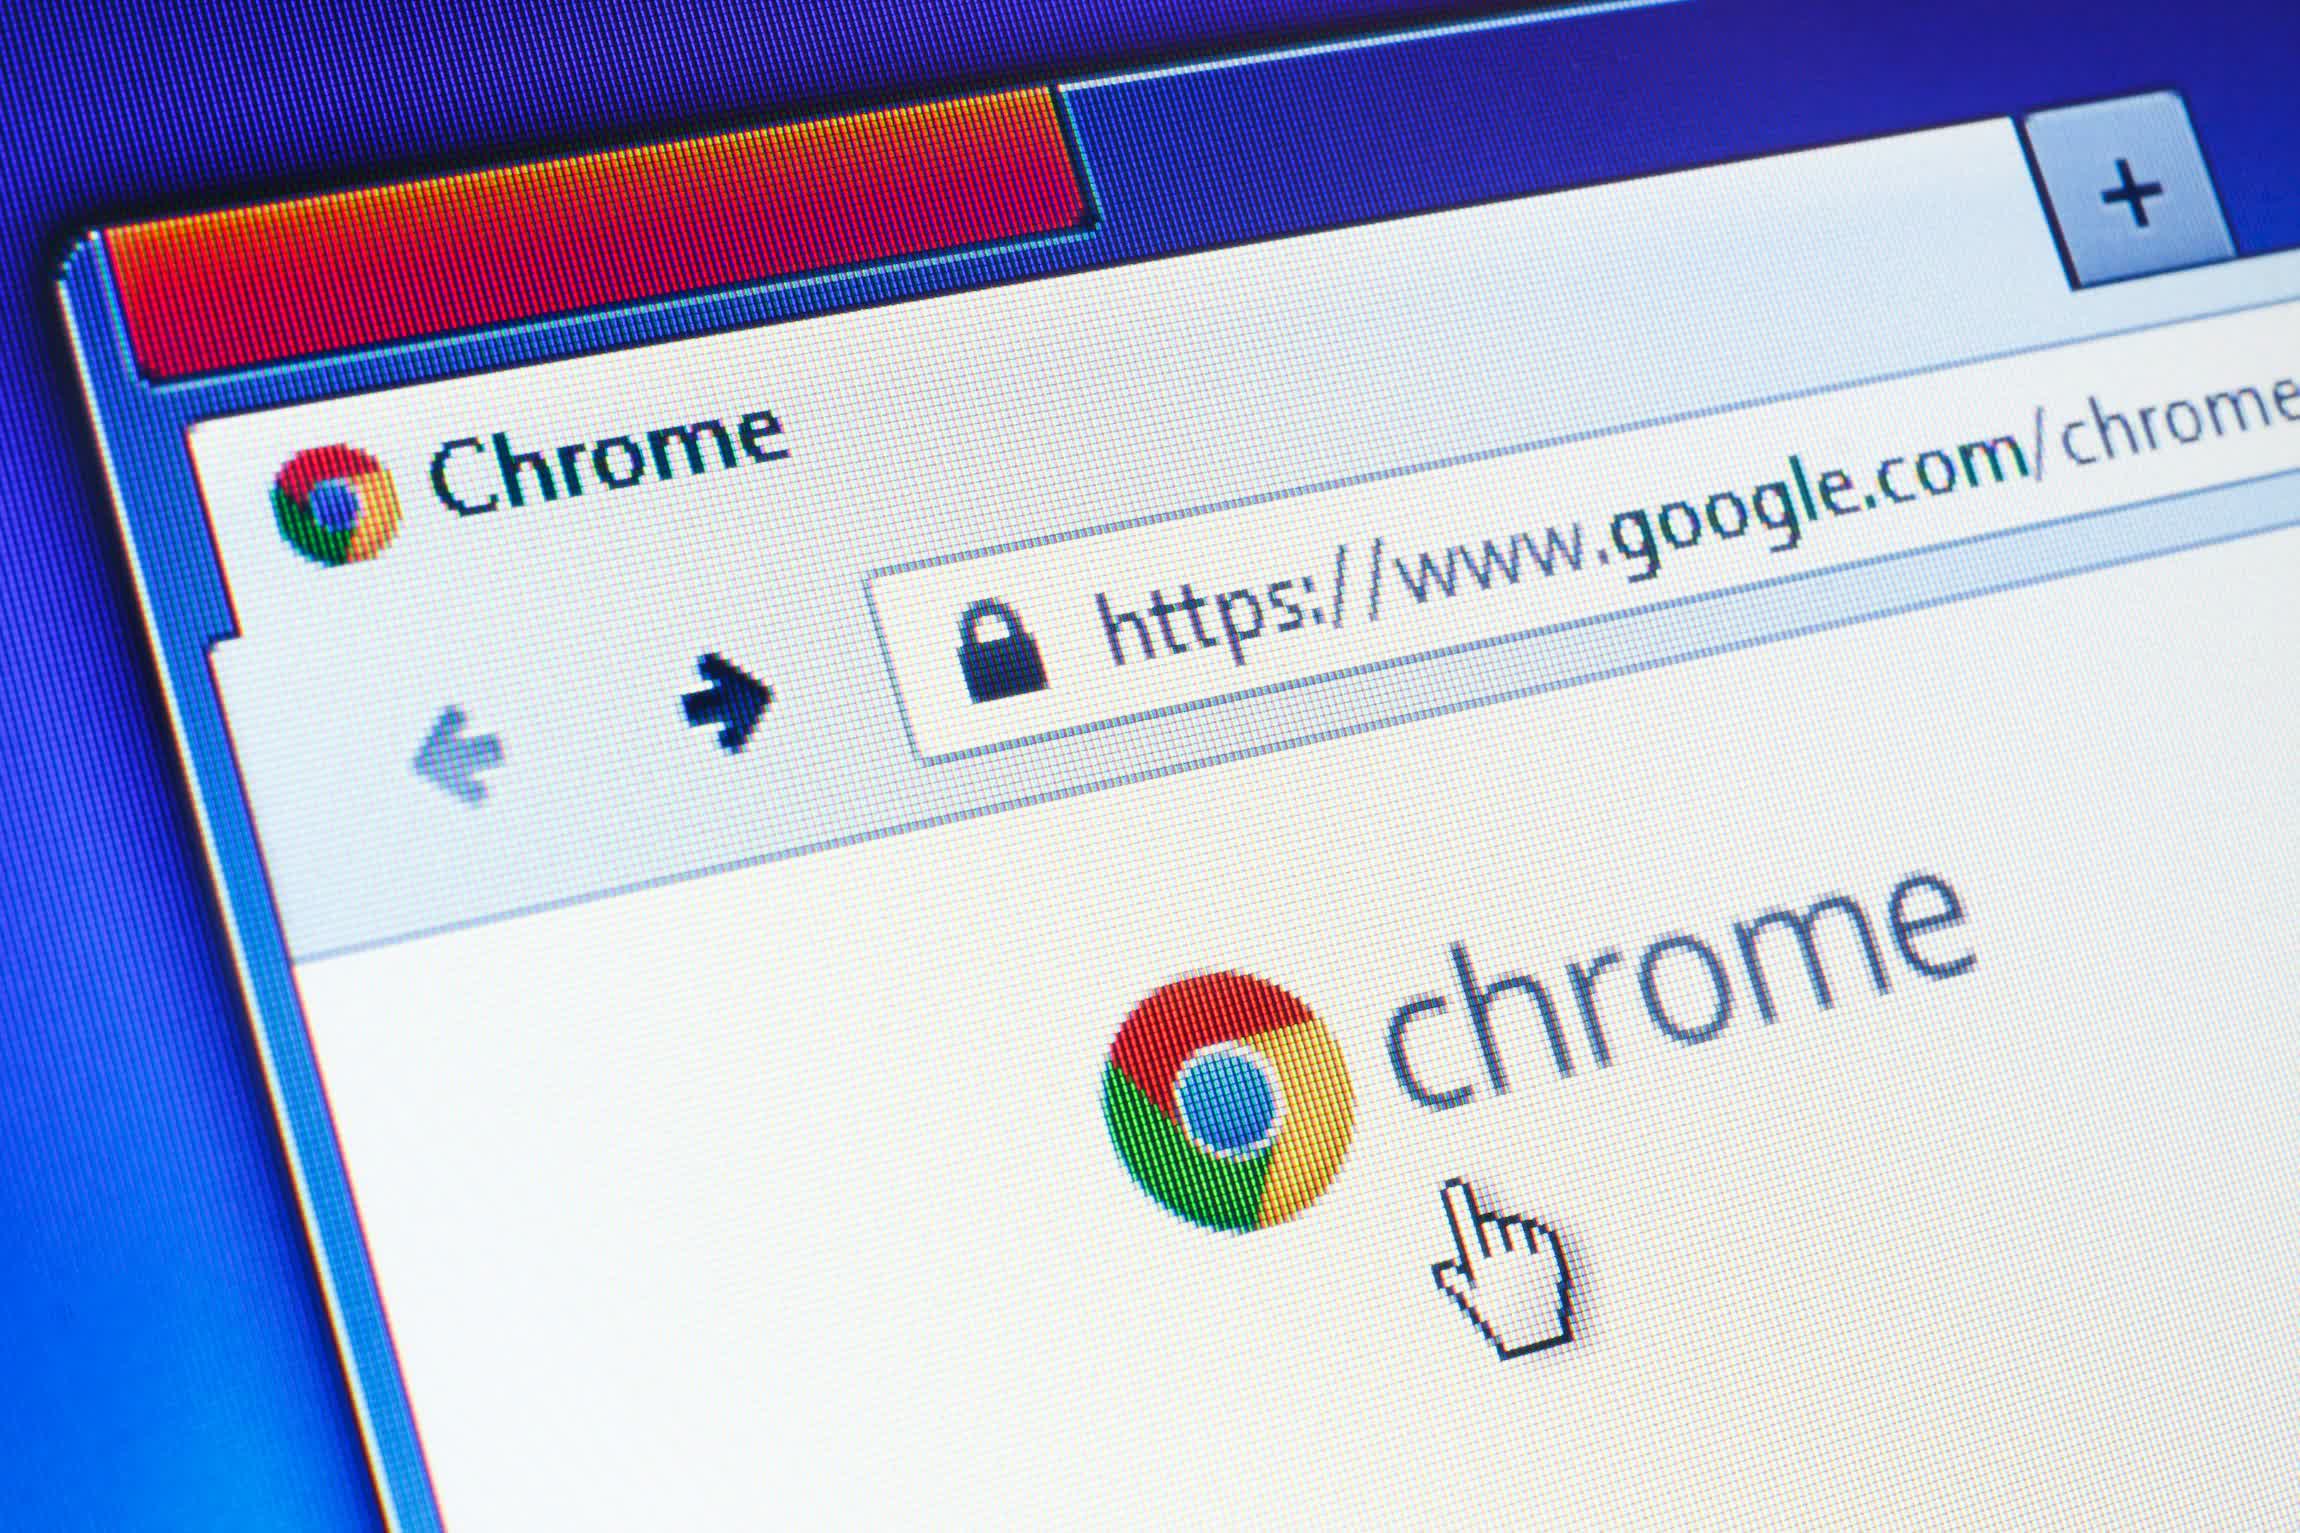 Chrome zero-day V8 vulnerability found being actively exploited